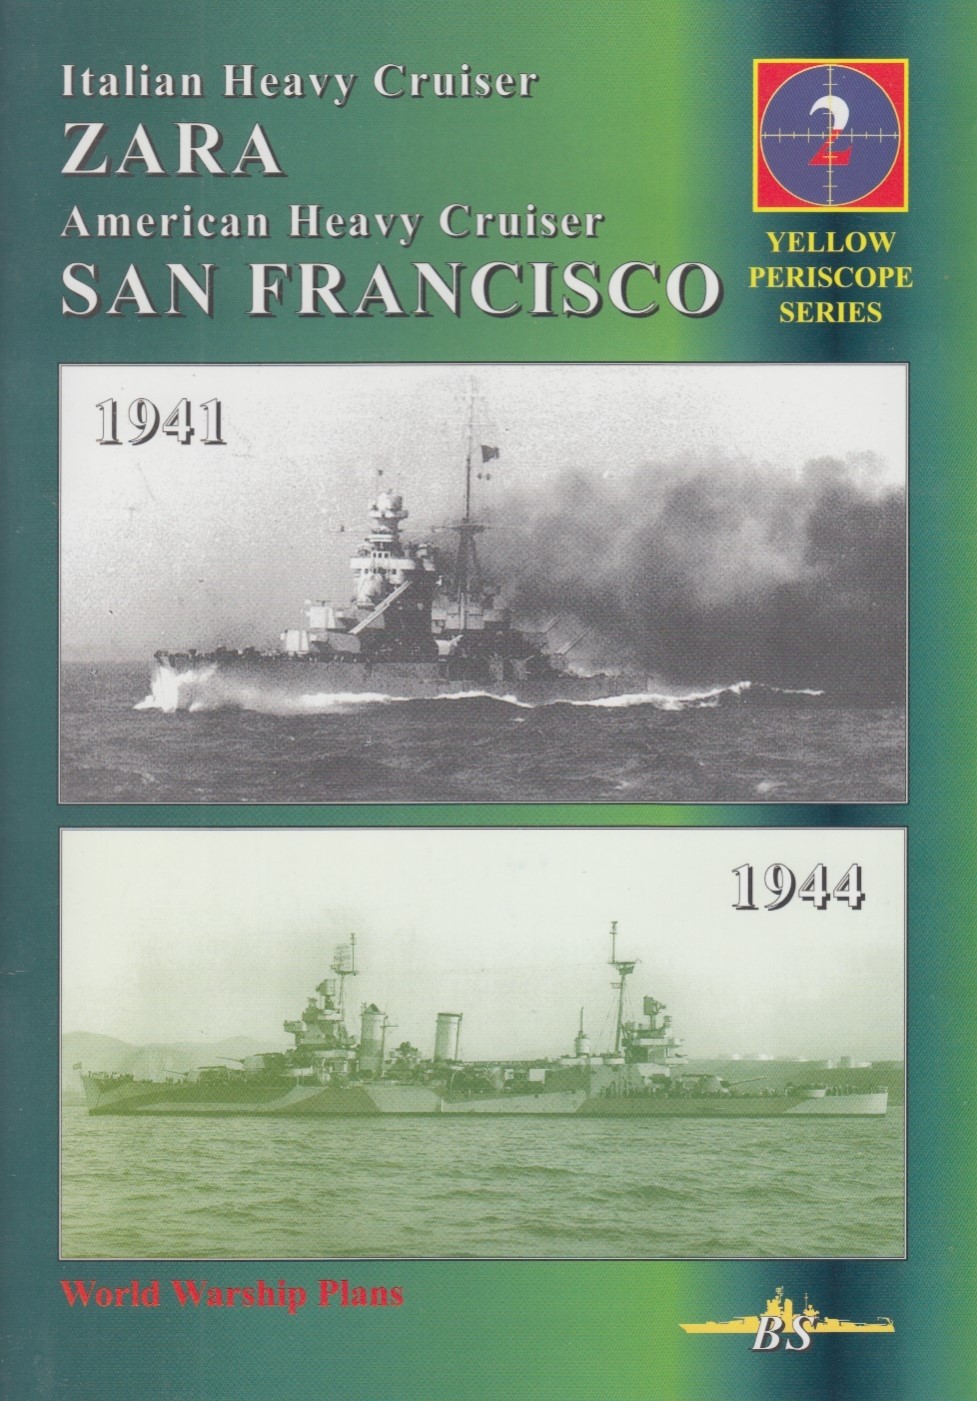 Yellow periscope No.2: RN ZARA, USS SAN FRANCISCO